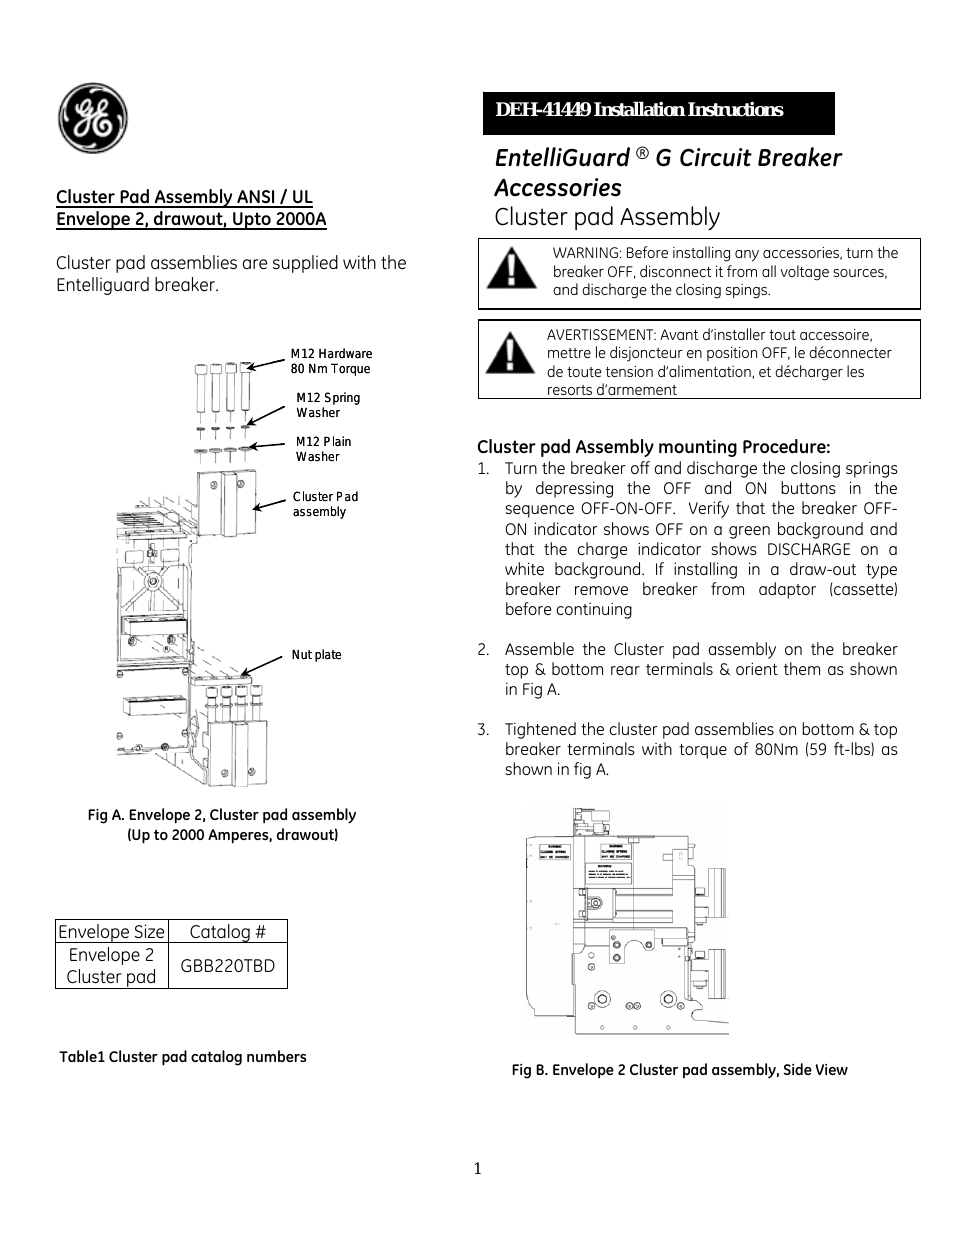 EntelliGuard G Cluster pad ANSI _ UL Envelope 2, drawout, Upto 2000A